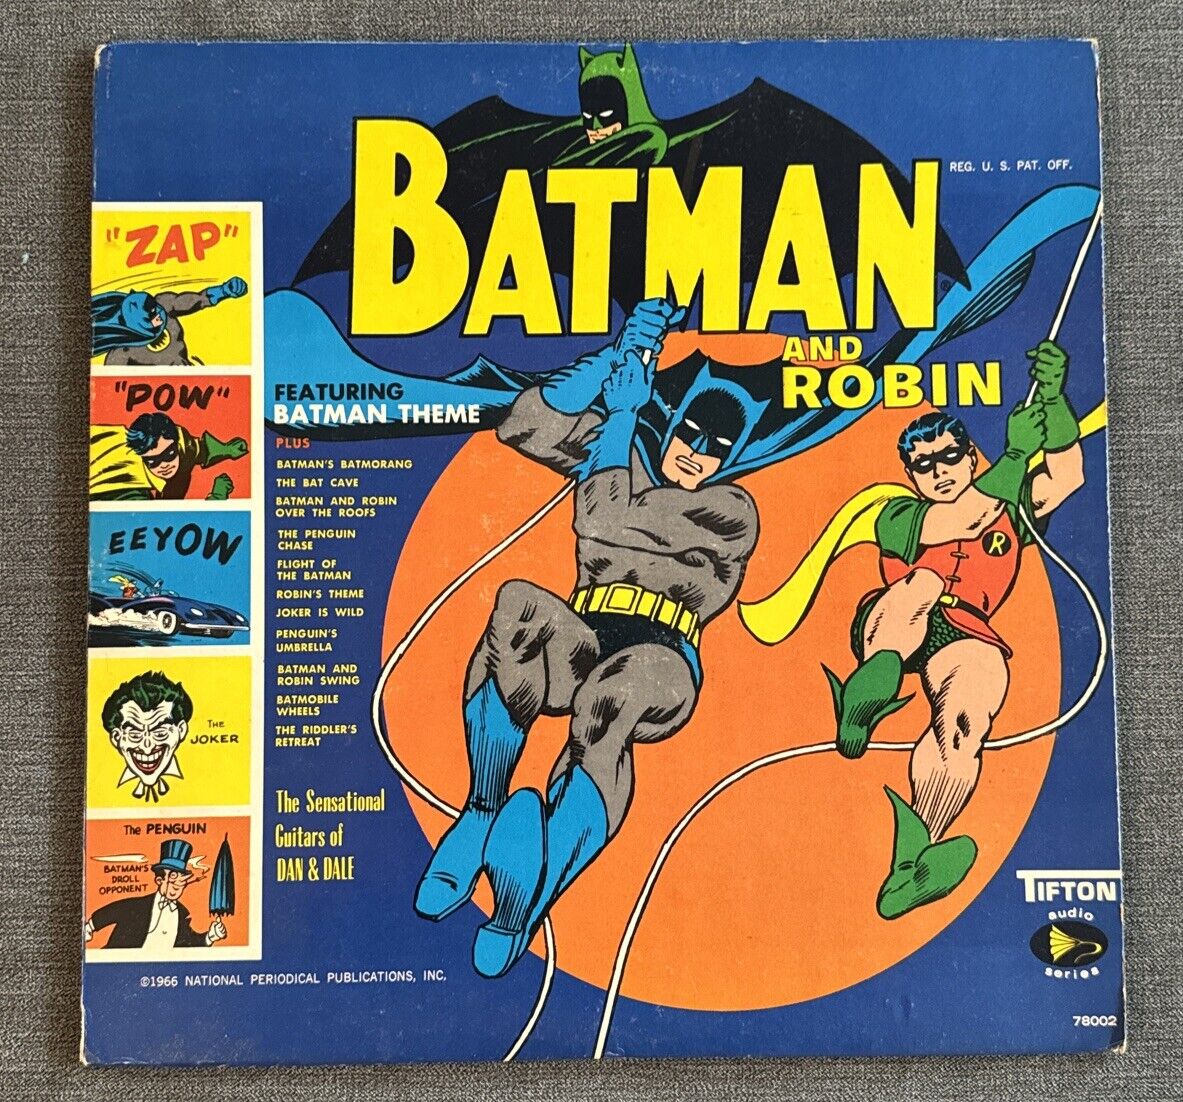 Batman And Robin 1966 Featuring Batman Theme LP Vinyl Tifton Records 78002